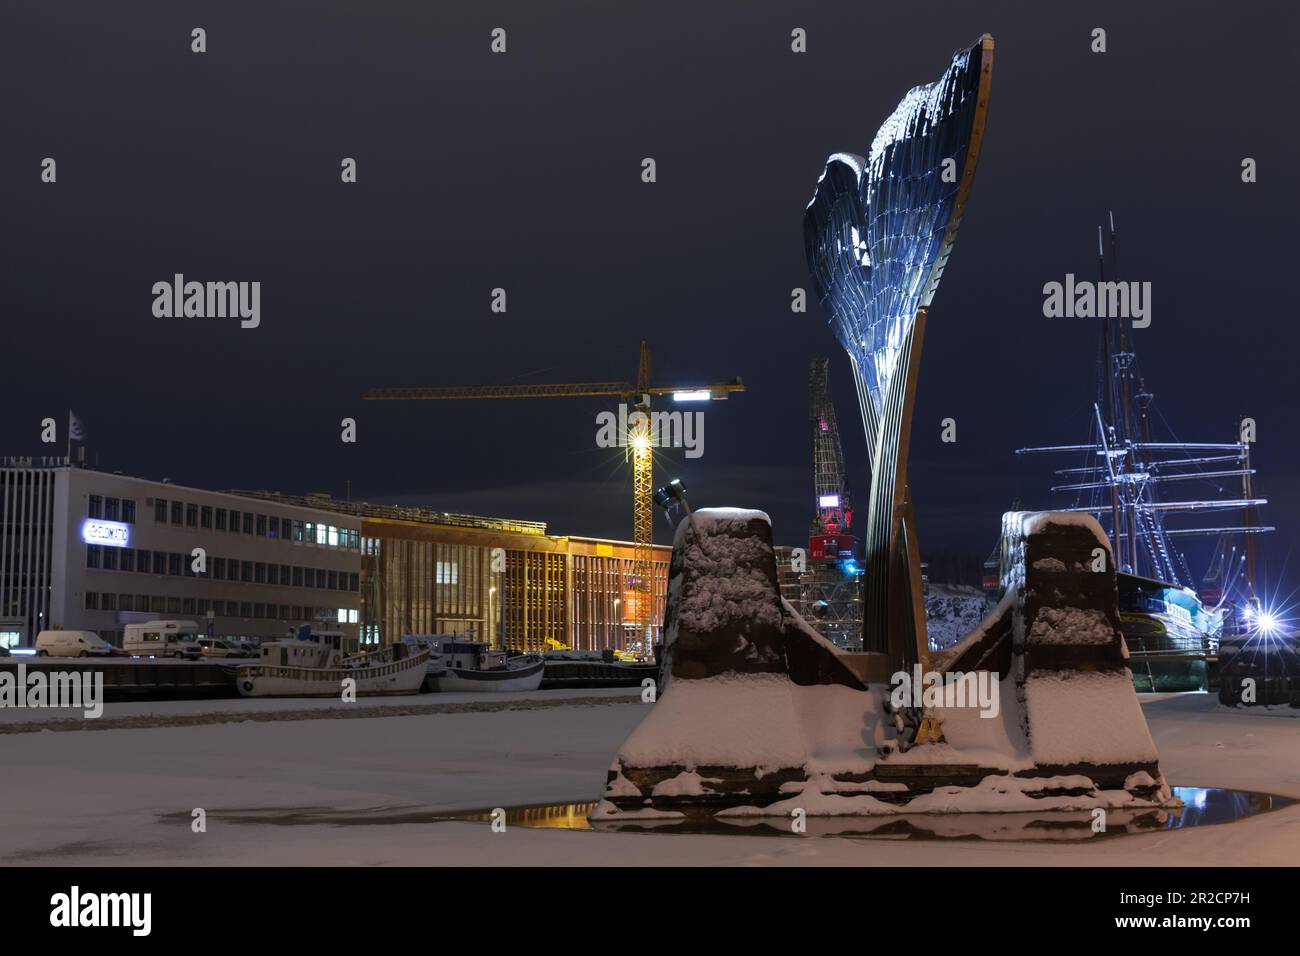 Turku, Finland - January 19, 2016: Harmonia or Harmony fountain sculpture by Achim Kuhn at night in winter season, vertical photo Stock Photo